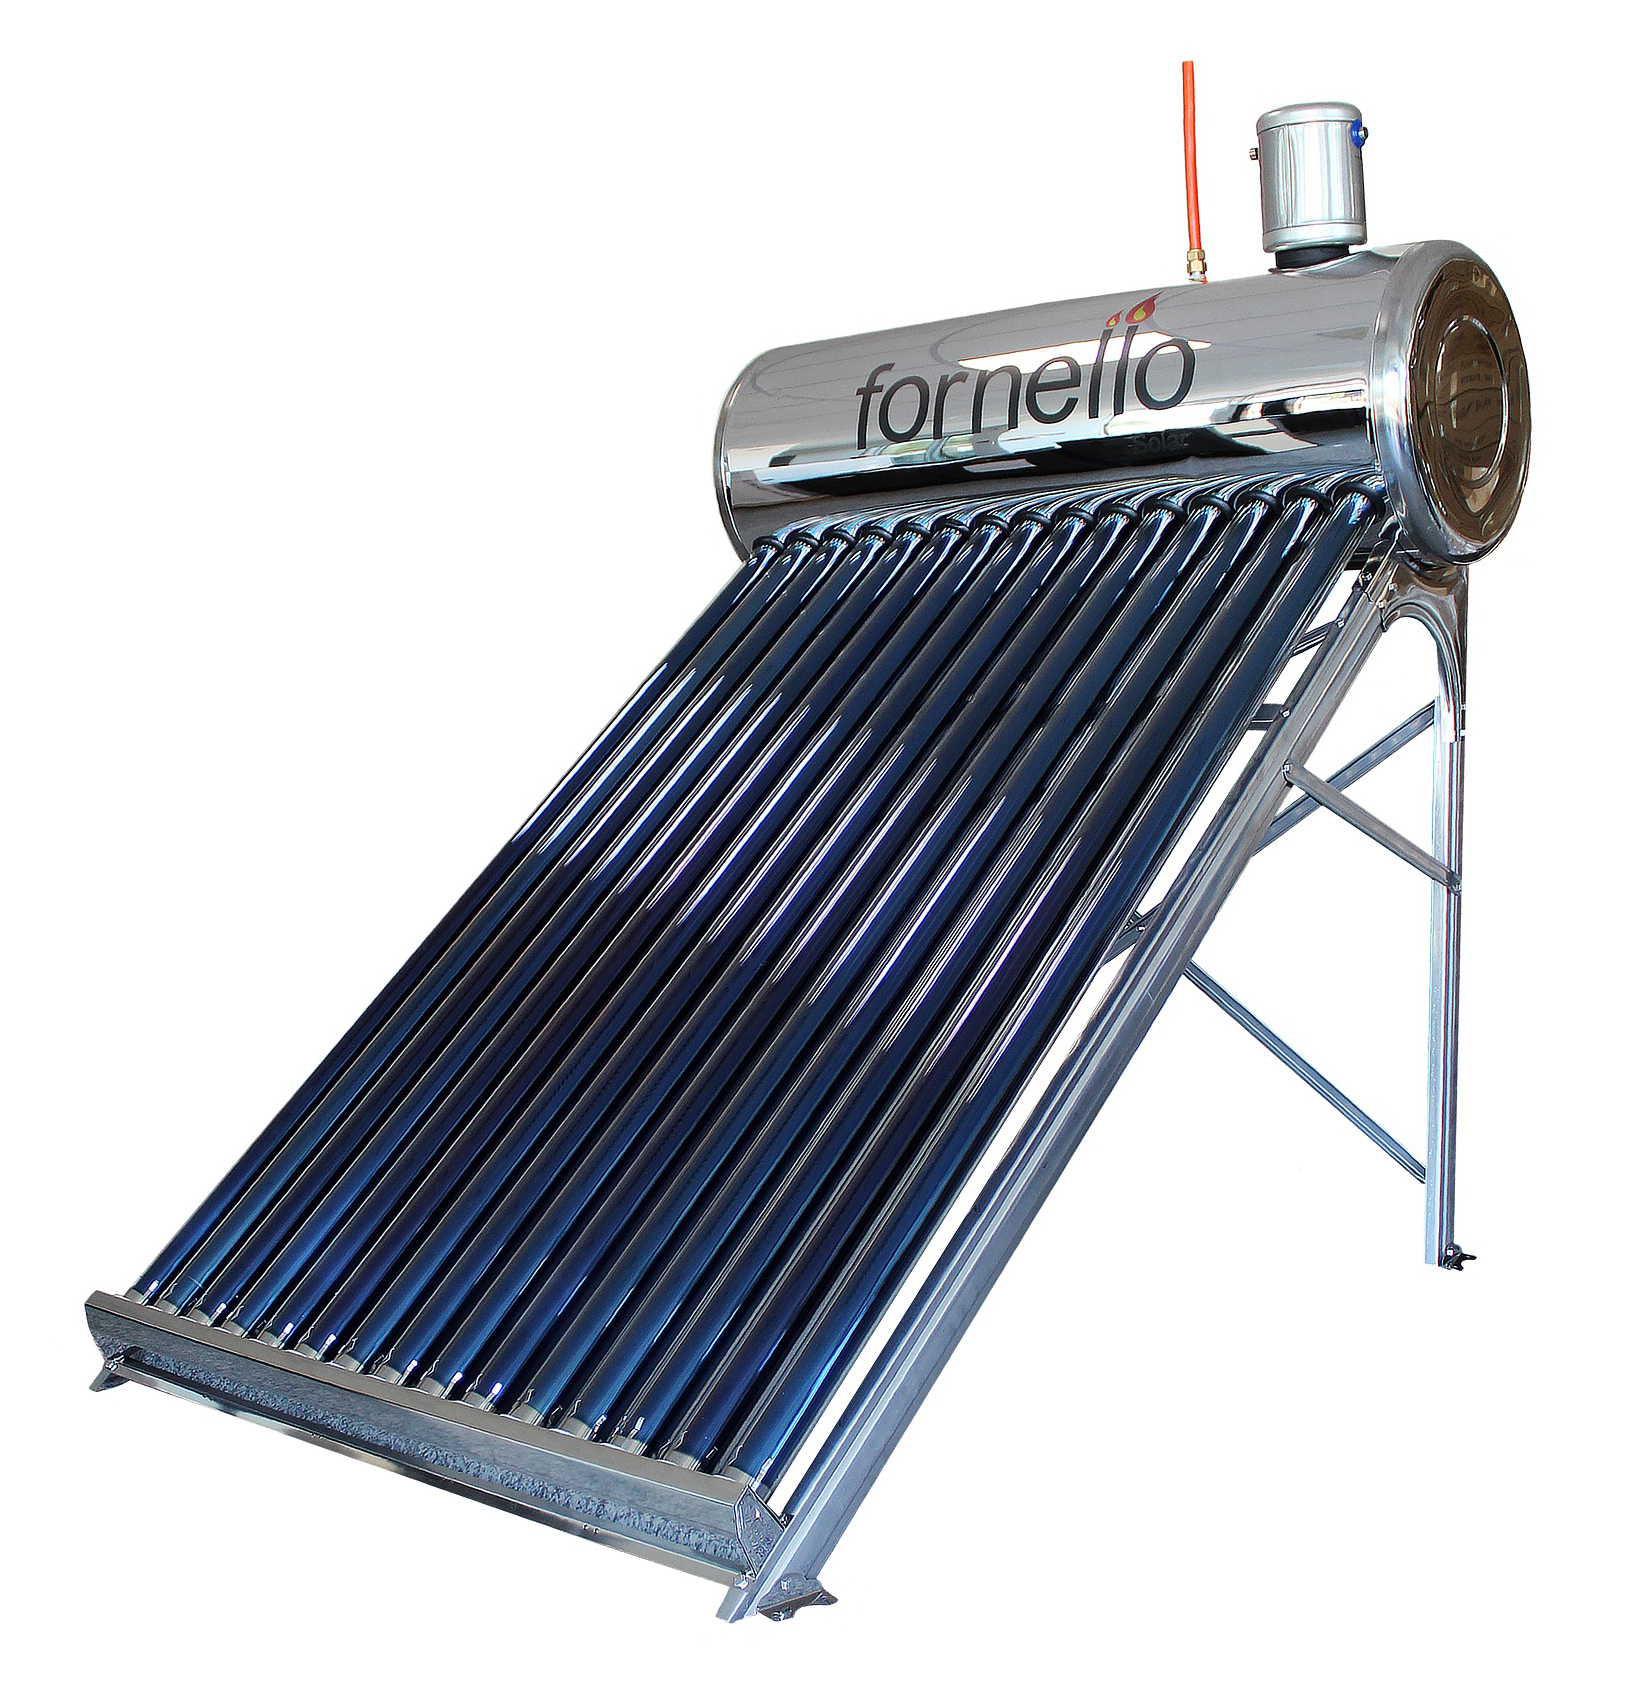 Panou solar nepresurizat Fornello pentru producere apa calda, cu rezervor inox 165 litri si 20 tuburi vidate Fornello imagine bricosteel.ro